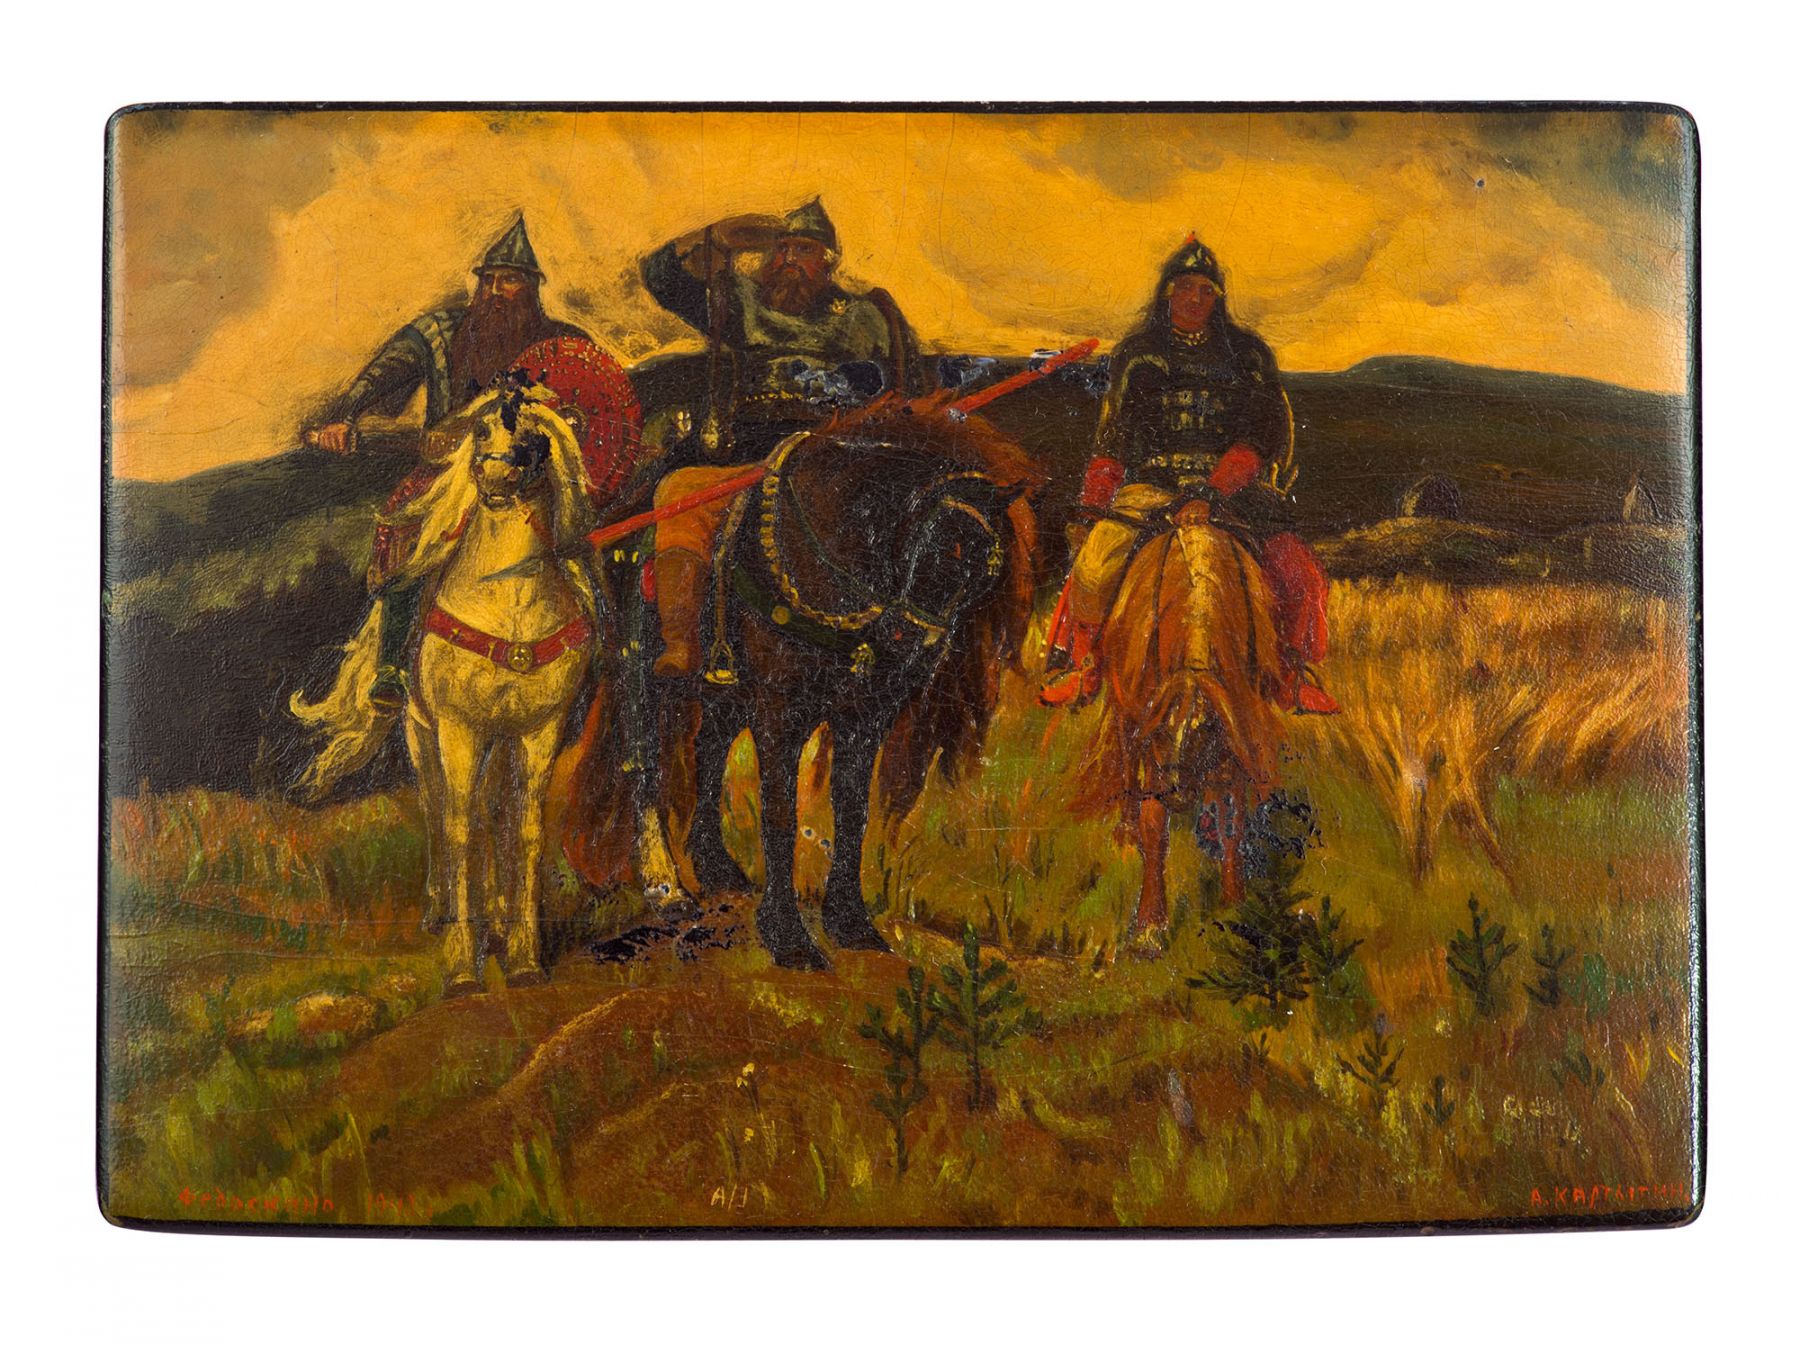 Шкатулка «Три богатыря» по картине В. Васнецова.